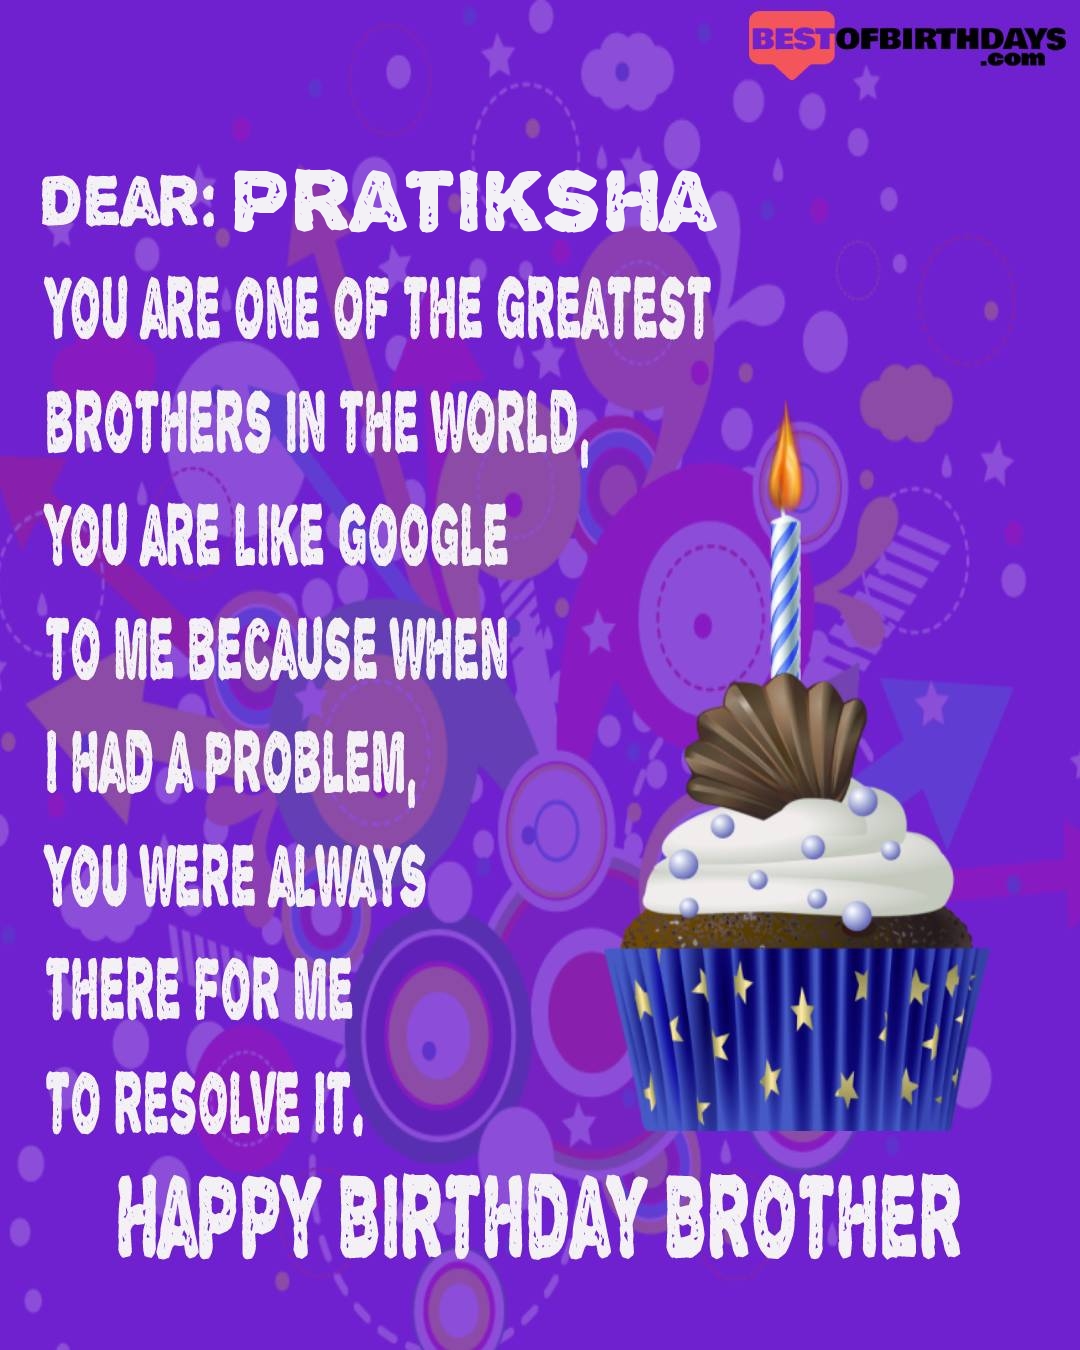 Happy birthday pratiksha bhai brother bro